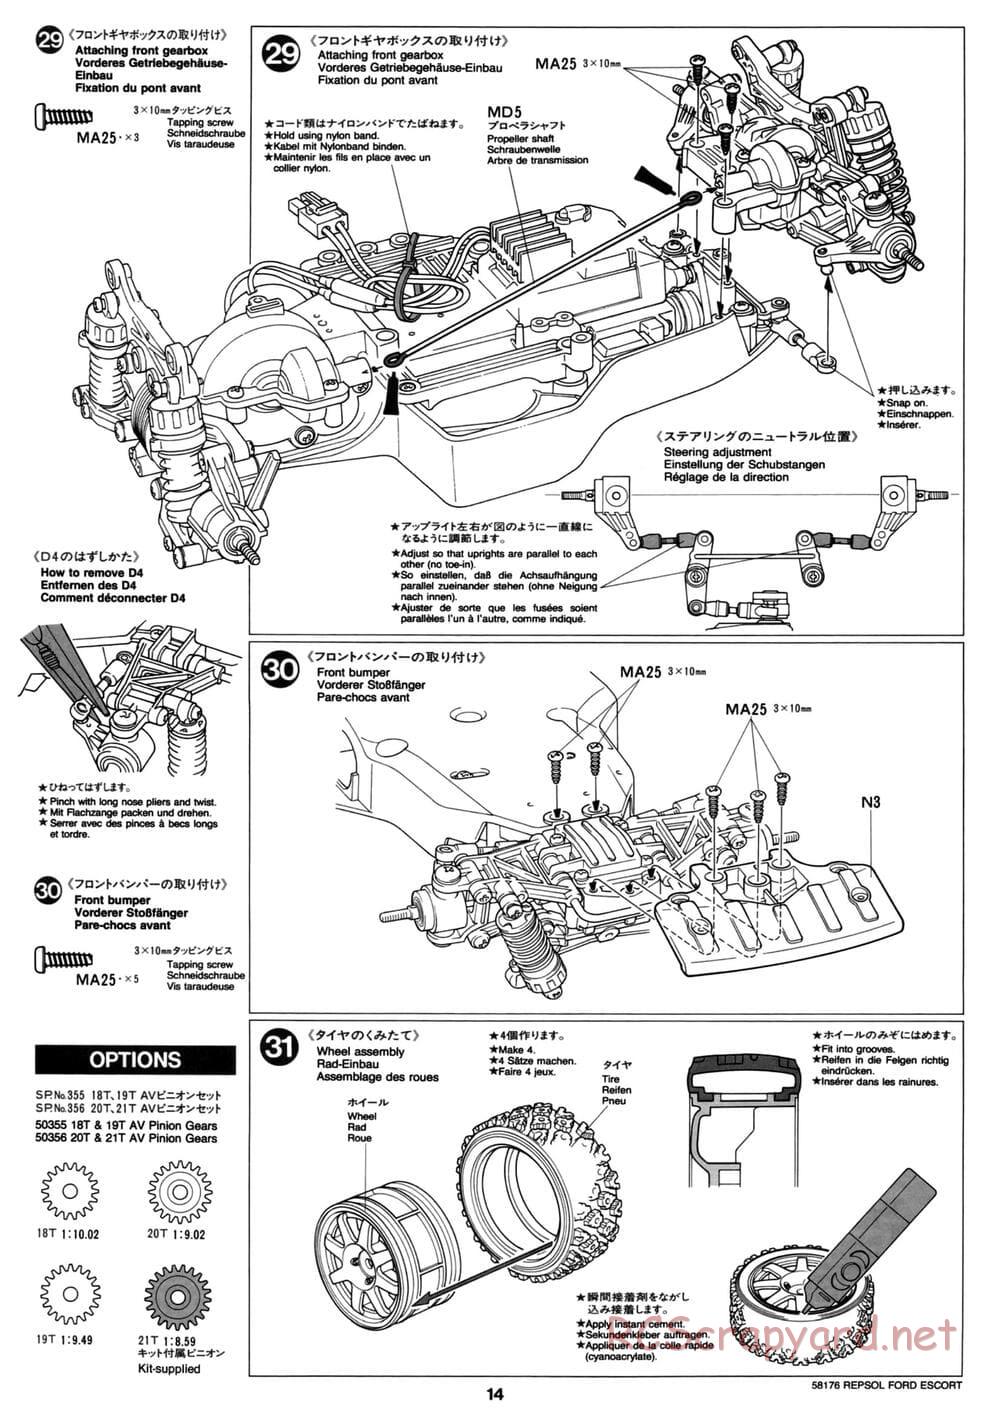 Tamiya - Repsol Ford Escort RS Cosworth - TA-02 Chassis - Manual - Page 14